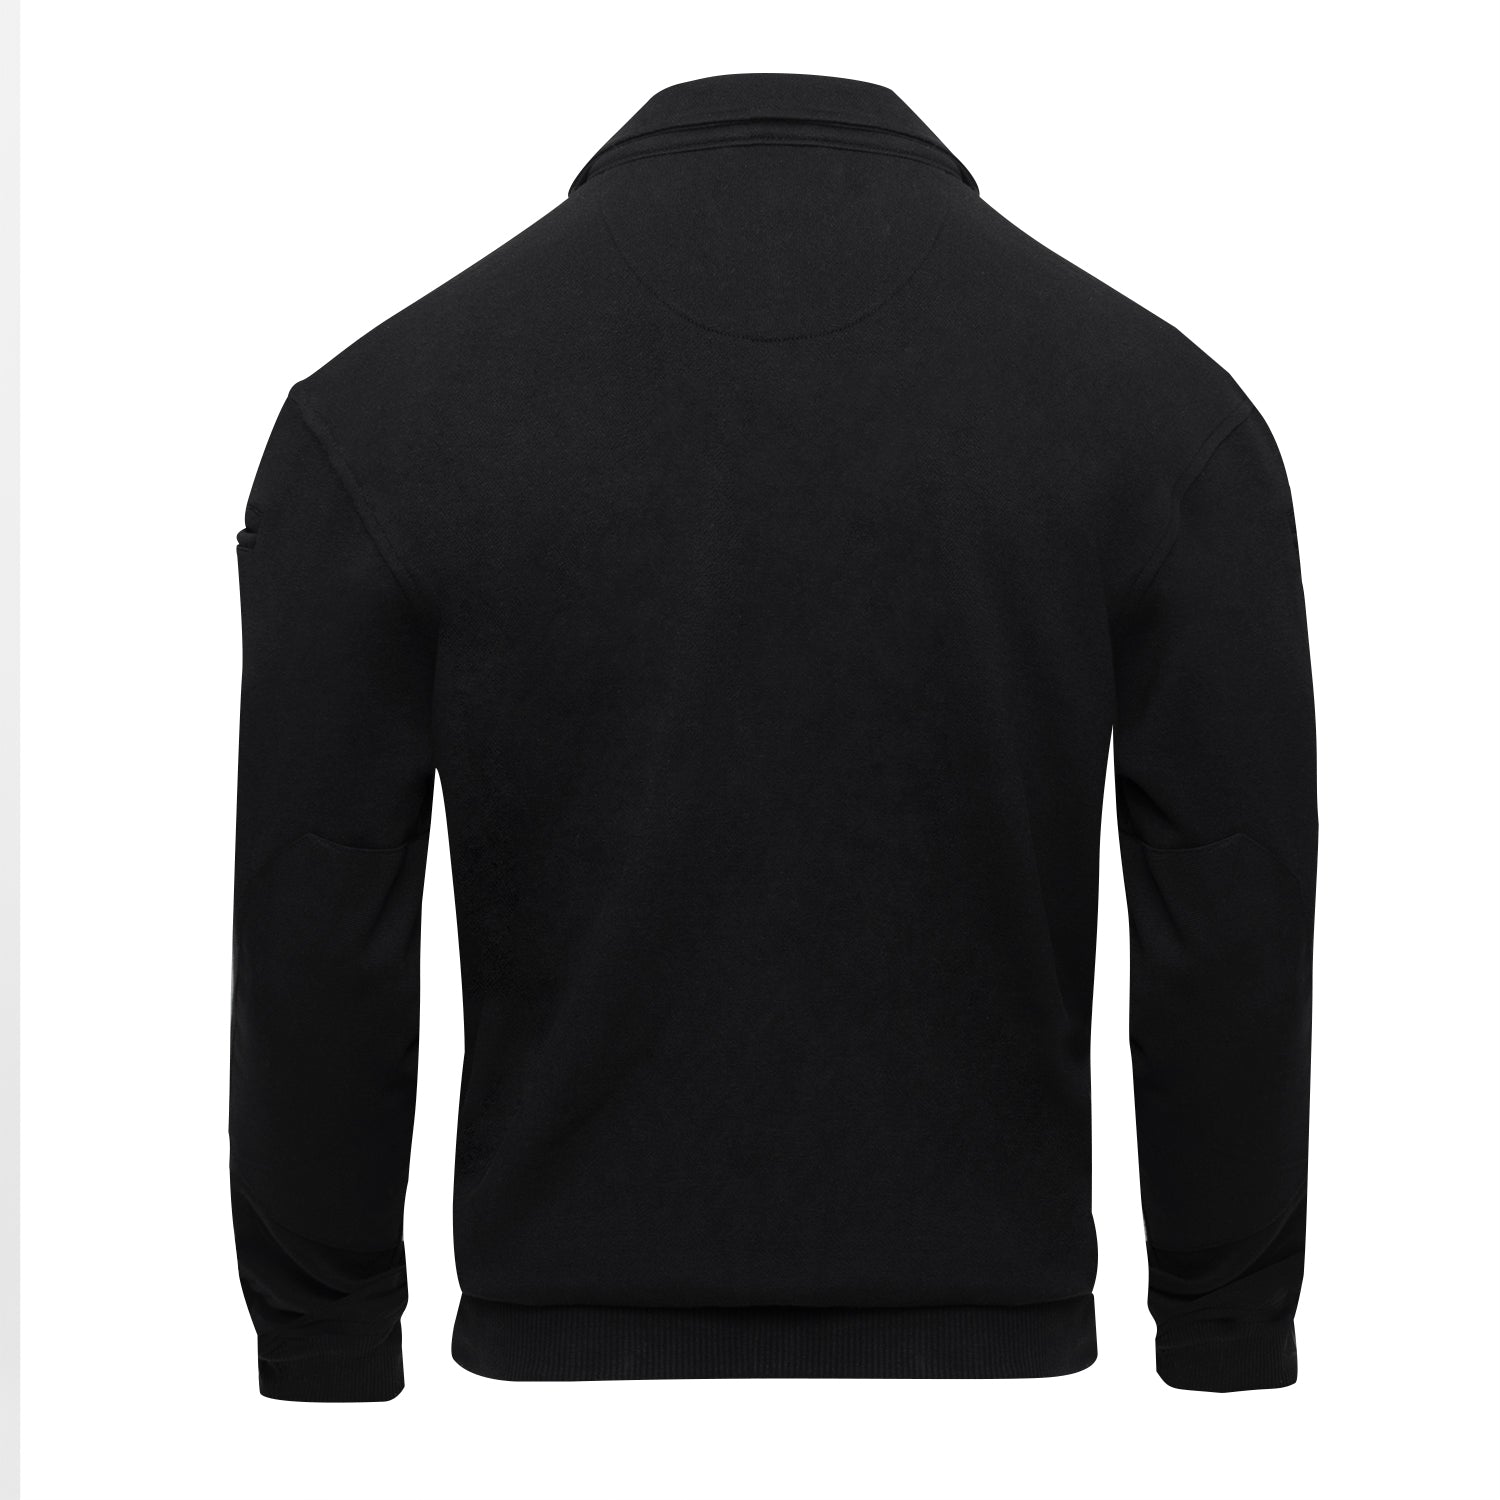 Rothco Security 1/4 Zip Job Shirt - Black - Tactical Choice Plus